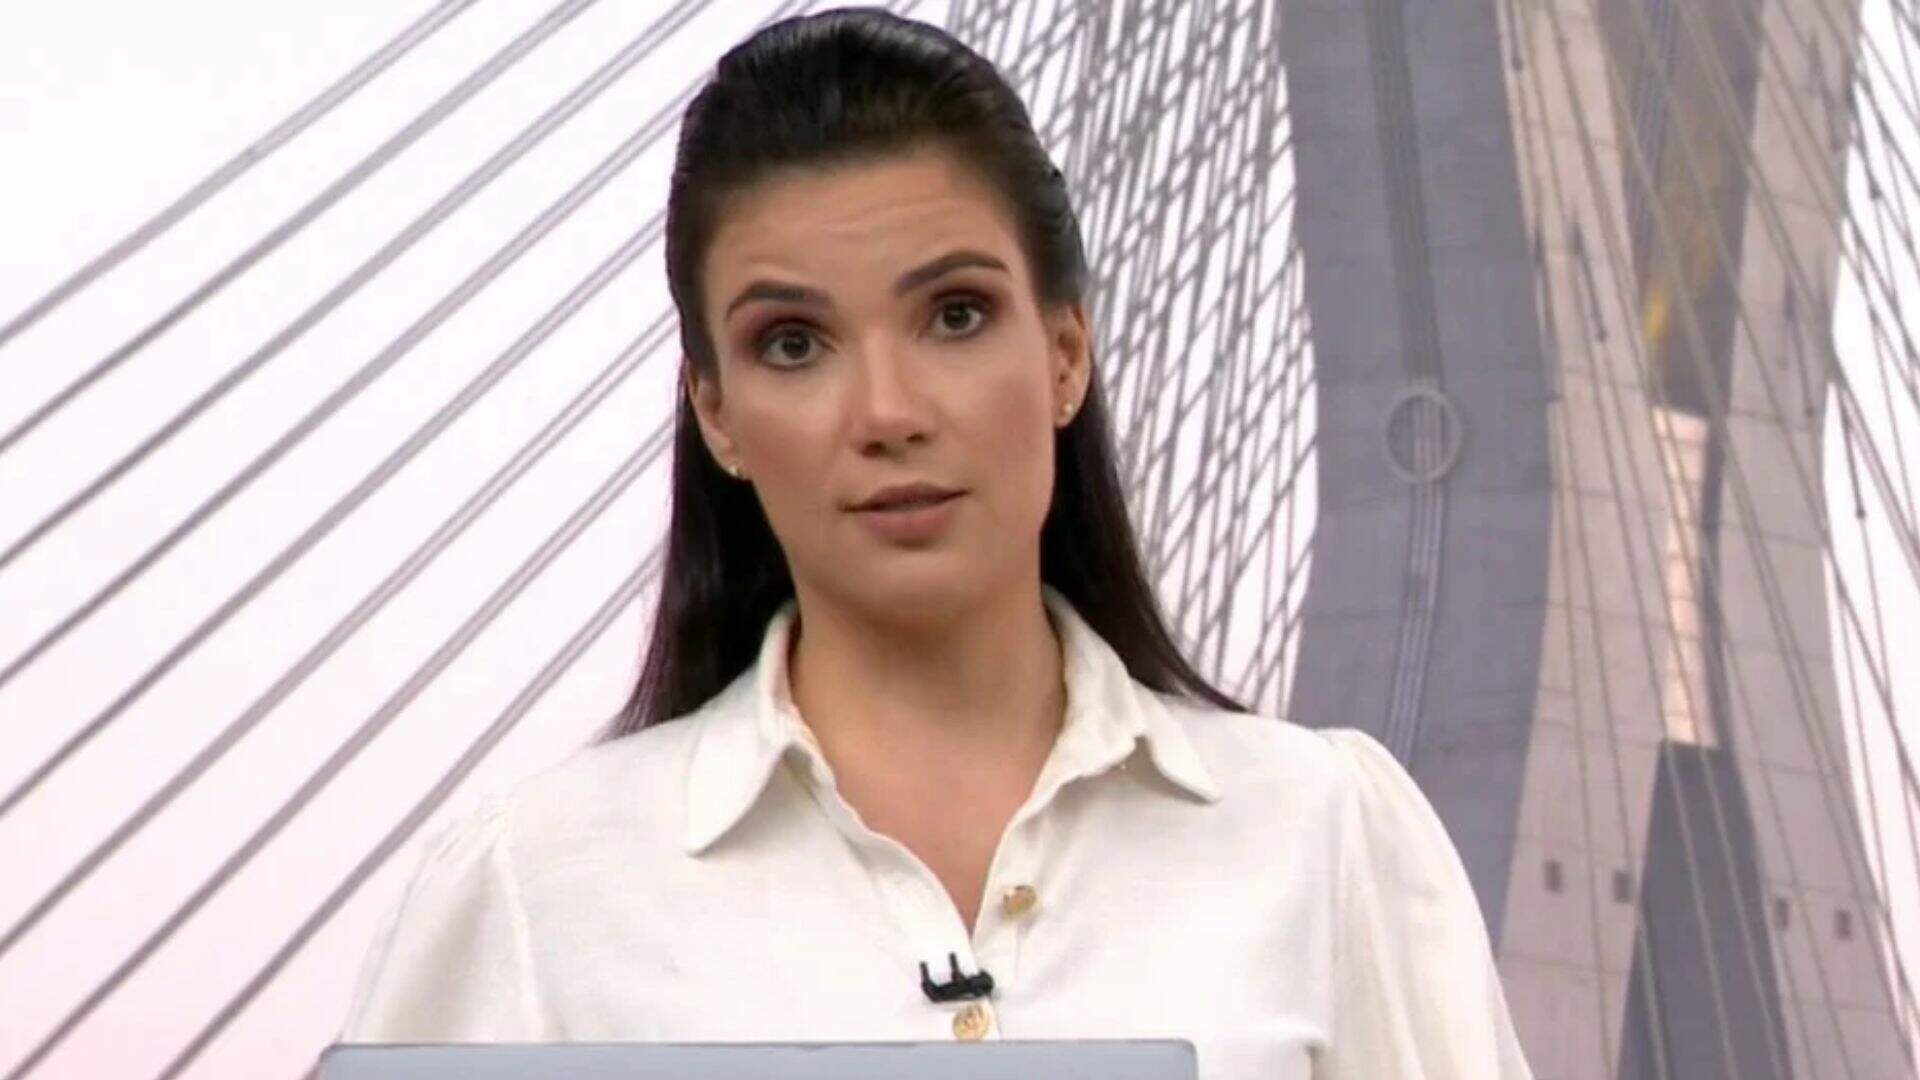 Sabina Simonato comete gafe ao vivo, motivo viraliza e jogo de cintura surpreende: “Acontece” - Metropolitana FM